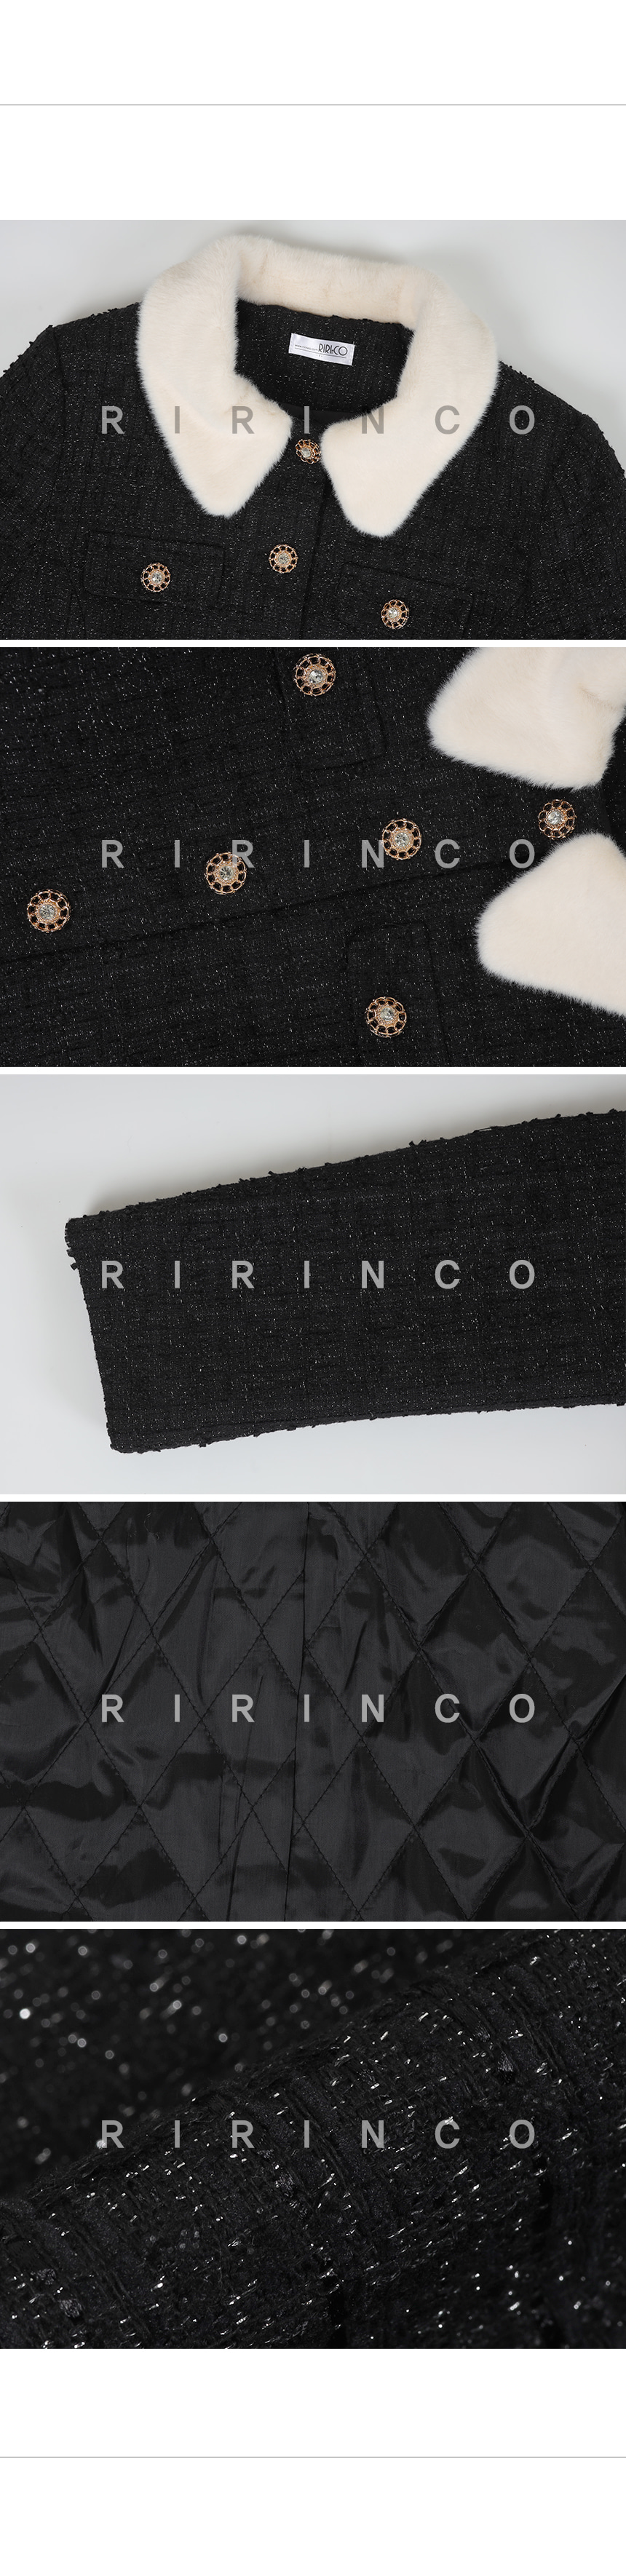 RIRINCO (キルティング裏地)ツイードツーピース ファークロップドジャケット